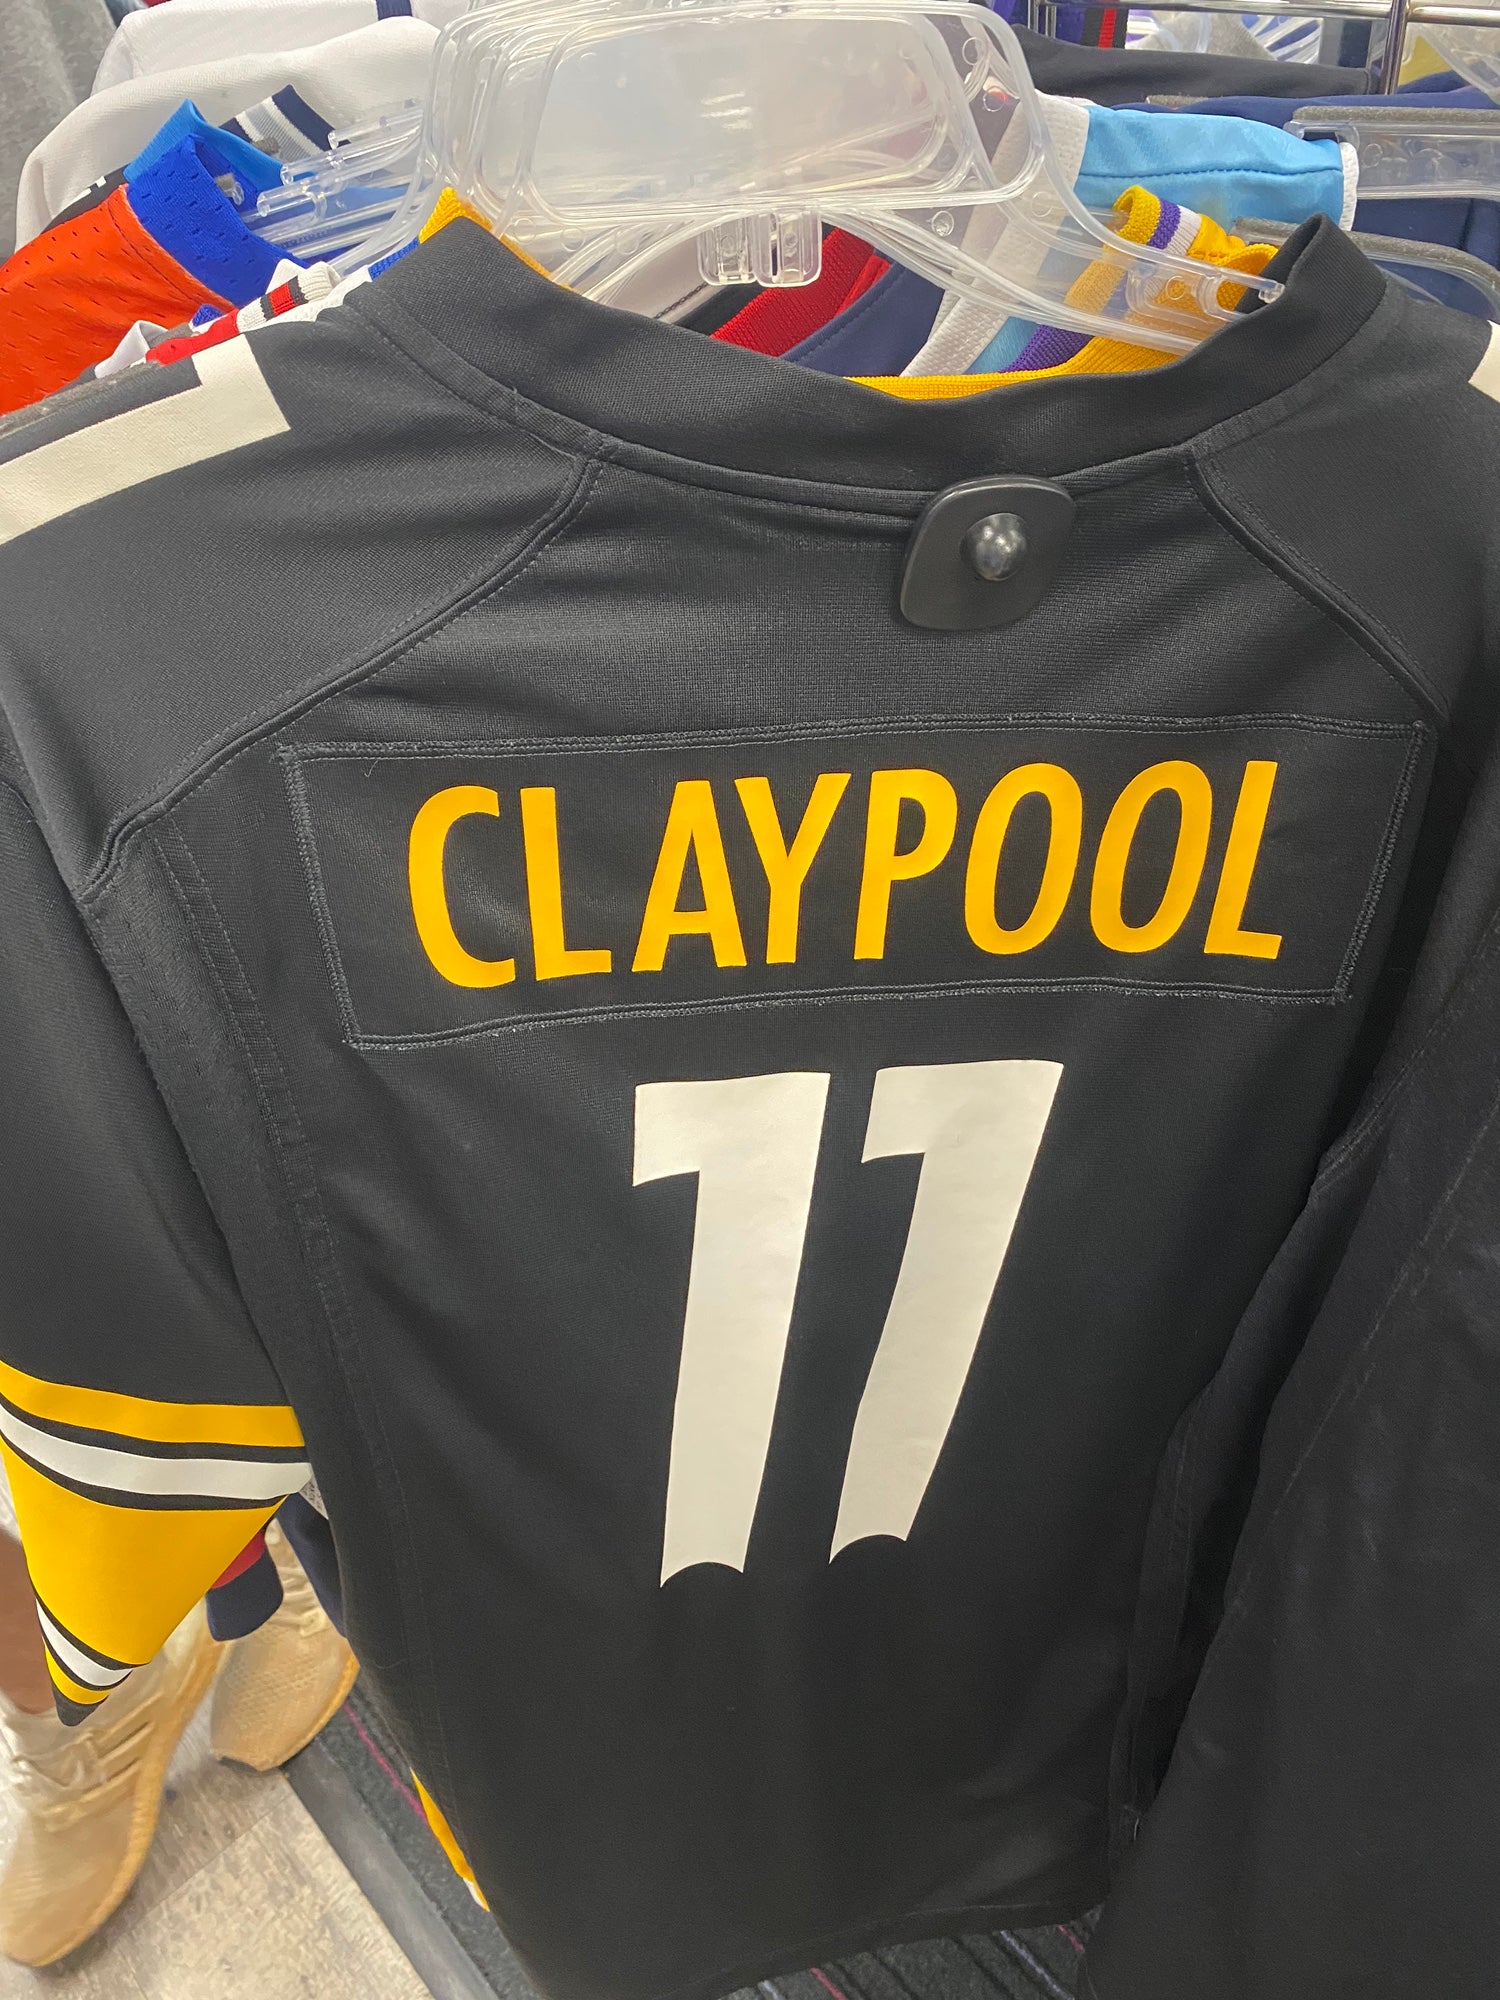 chase claypool apparel